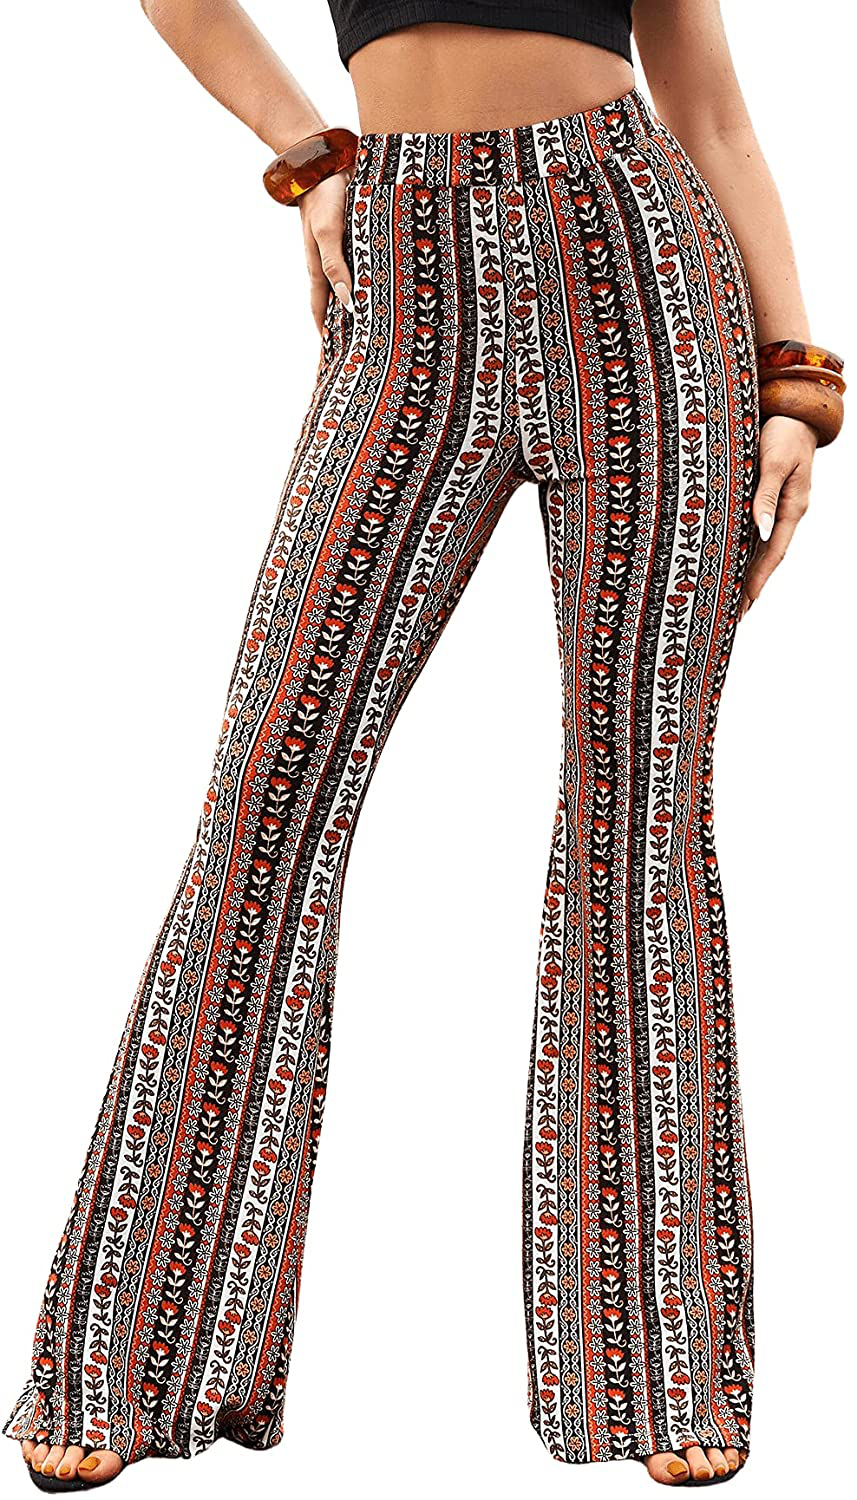 WDIRARA Women's Snakeskin High Waist Casual Flare Bell Bottom Stretch Long Pants